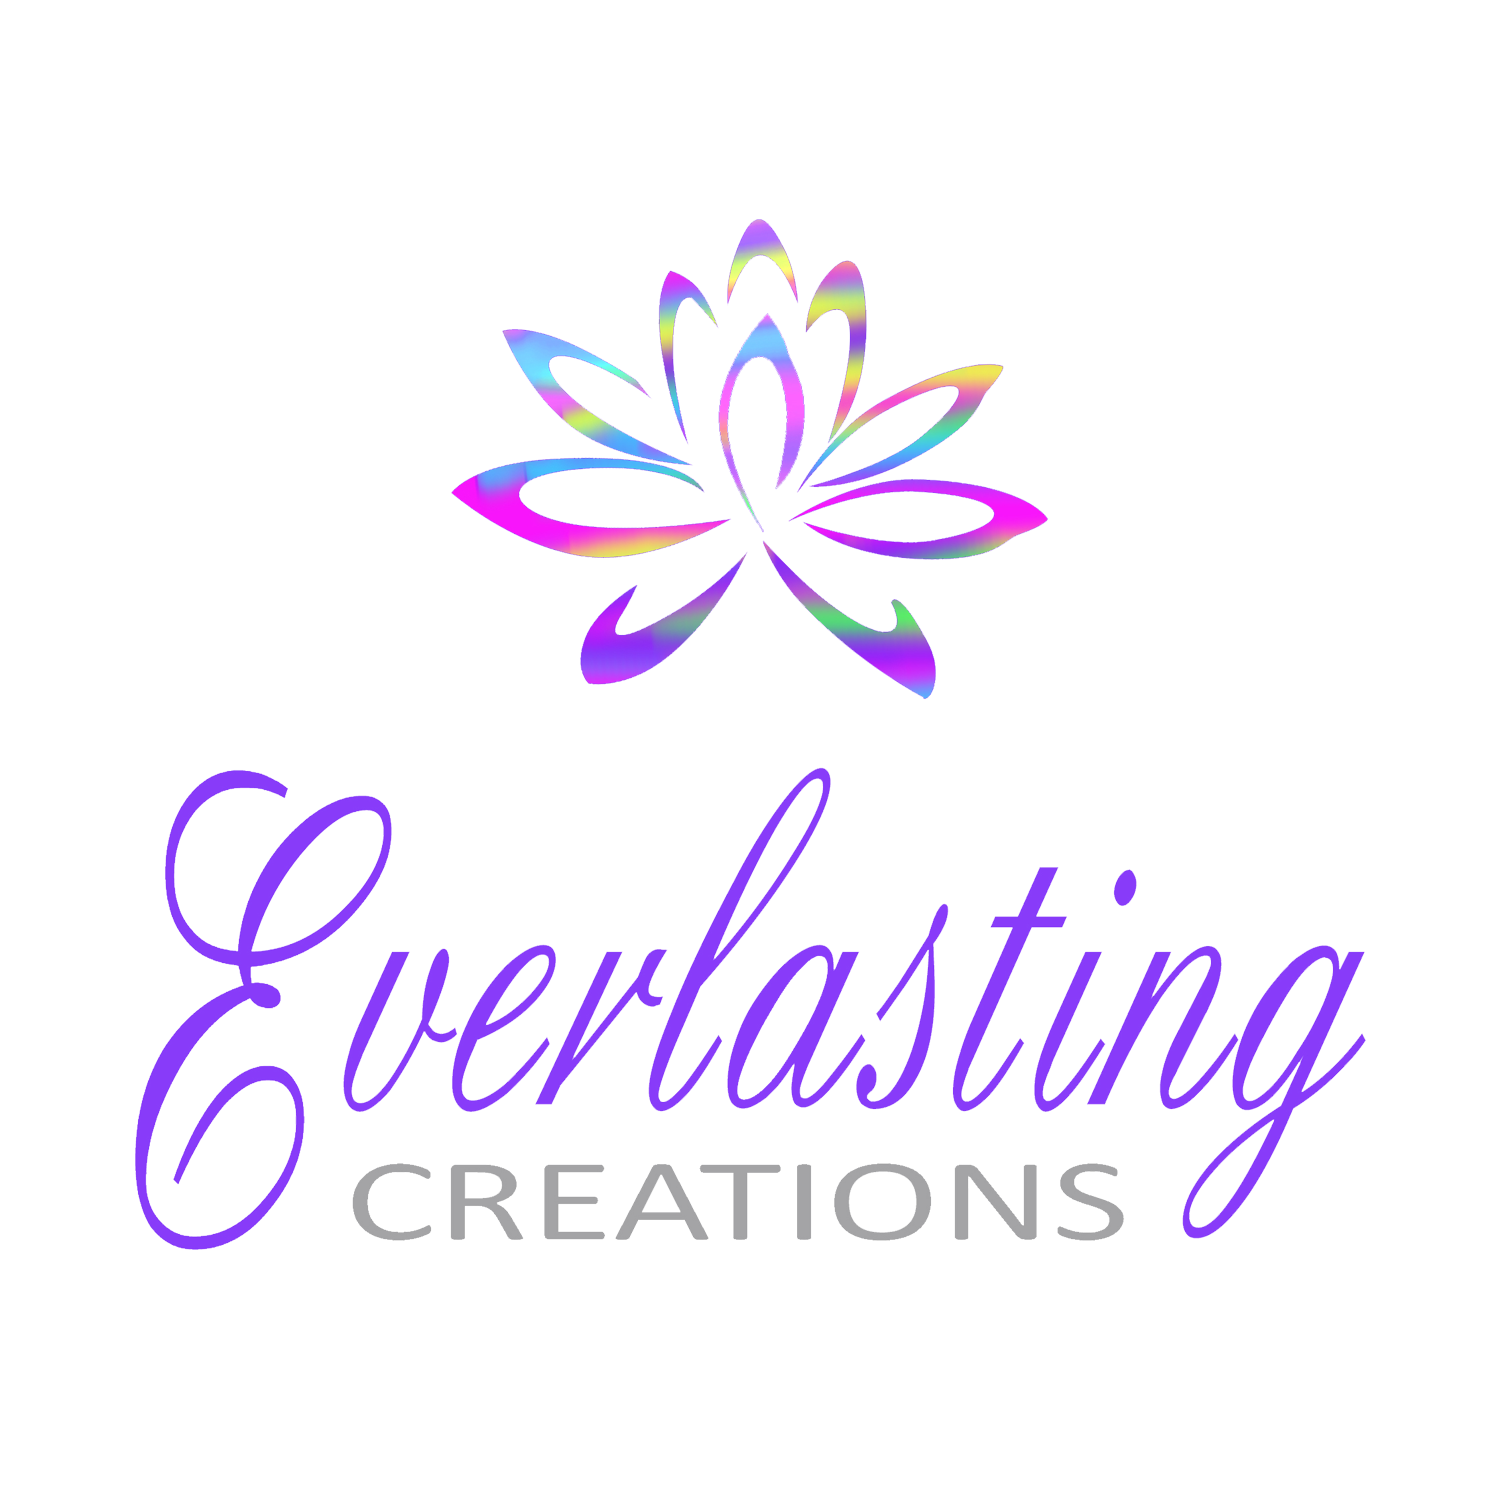 Everlasting Creations Logo 3 - My Everlasting Creations